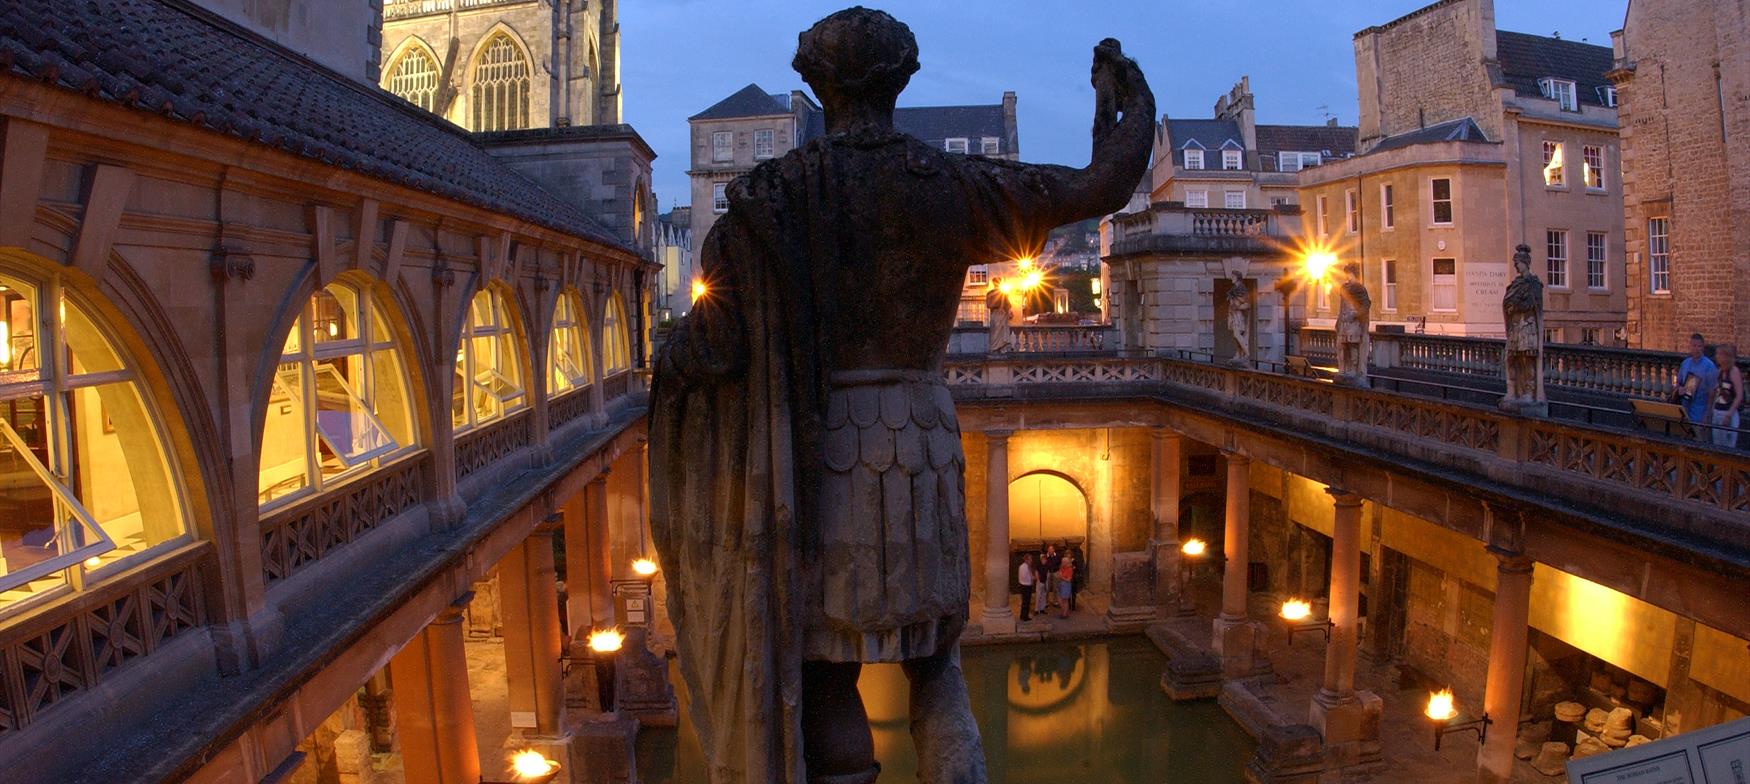 Roman Baths at Moonlight with Statue of Roman